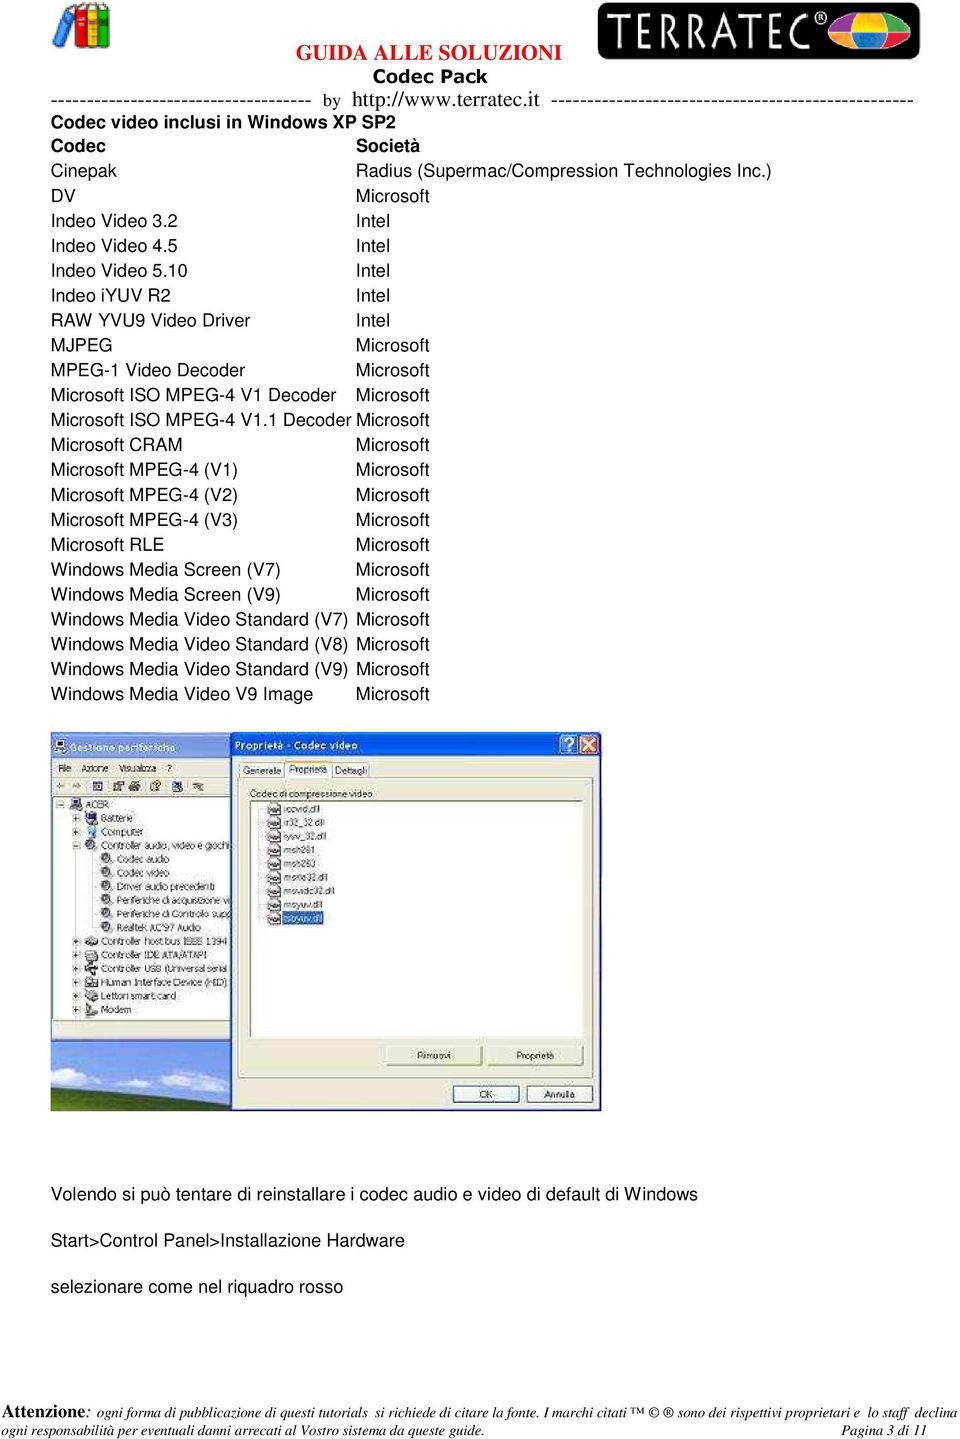 1 Decoder CRAM MPEG-4 (V1) MPEG-4 (V2) MPEG-4 (V3) RLE Windows Media Screen (V7) Windows Media Screen (V9) Windows Media Video Standard (V7) Windows Media Video Standard (V8) Windows Media